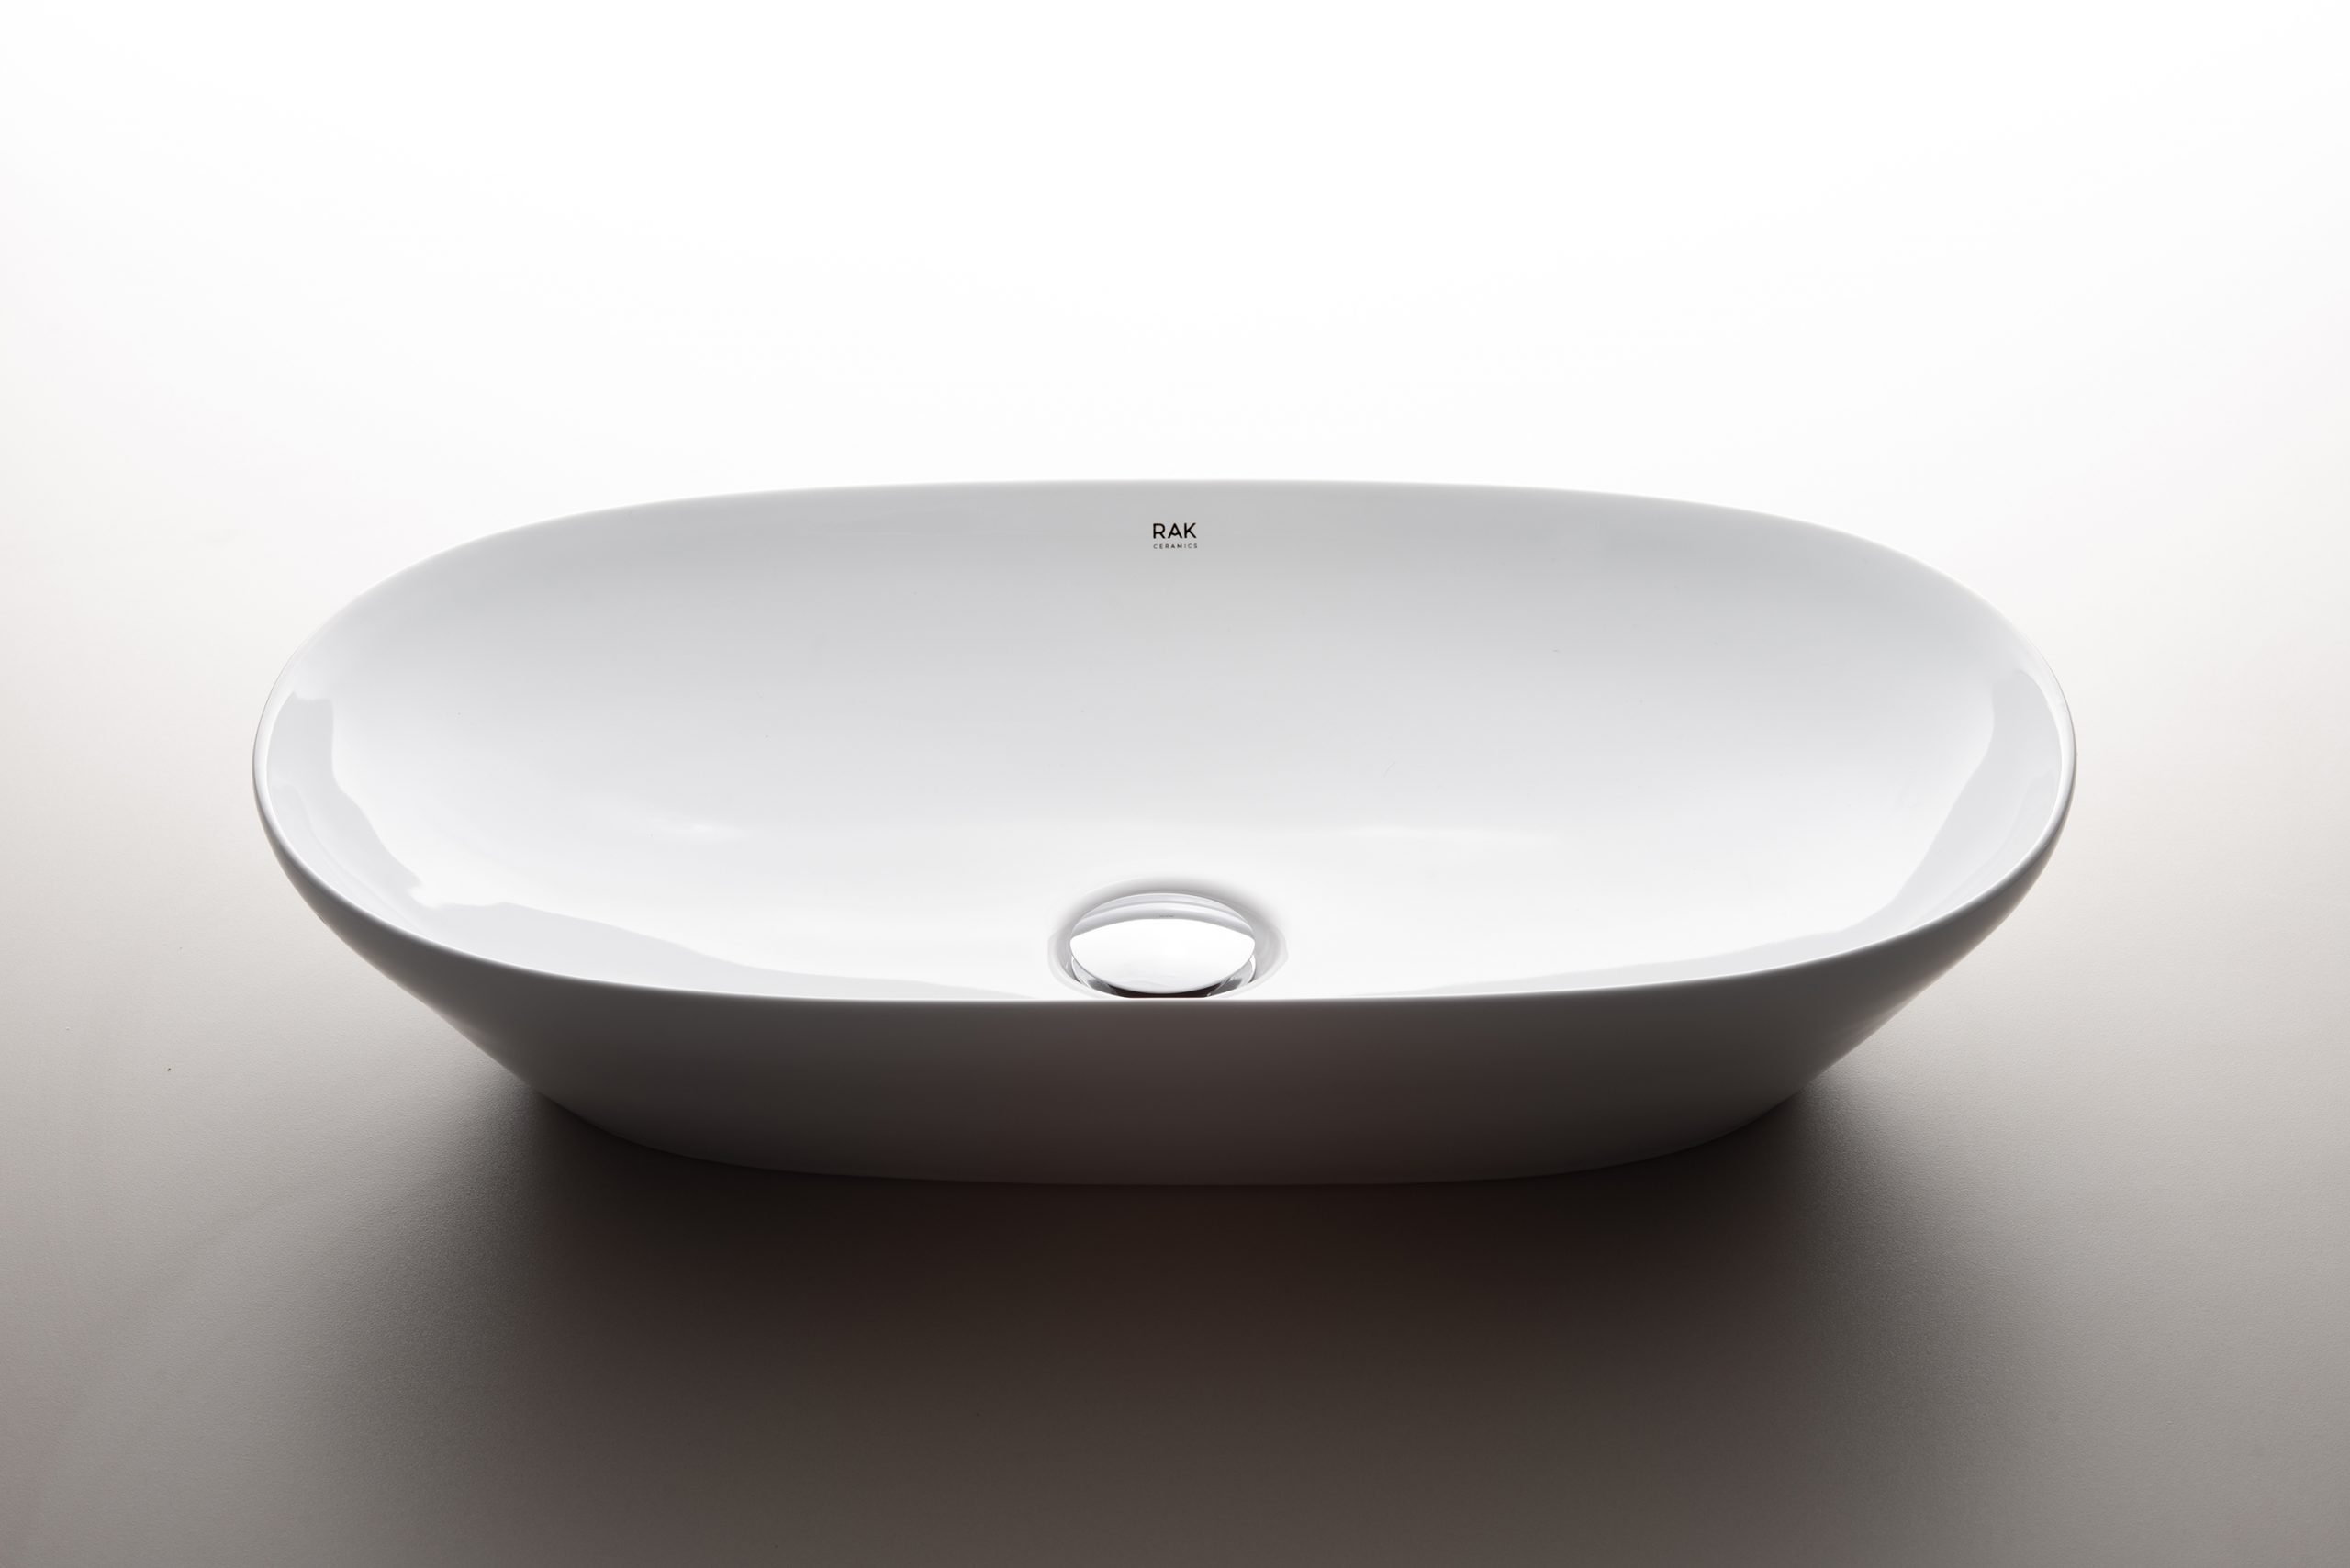 Oval washbasin Variant washbasins designed by Debiasi Sandri for RAK Ceramics